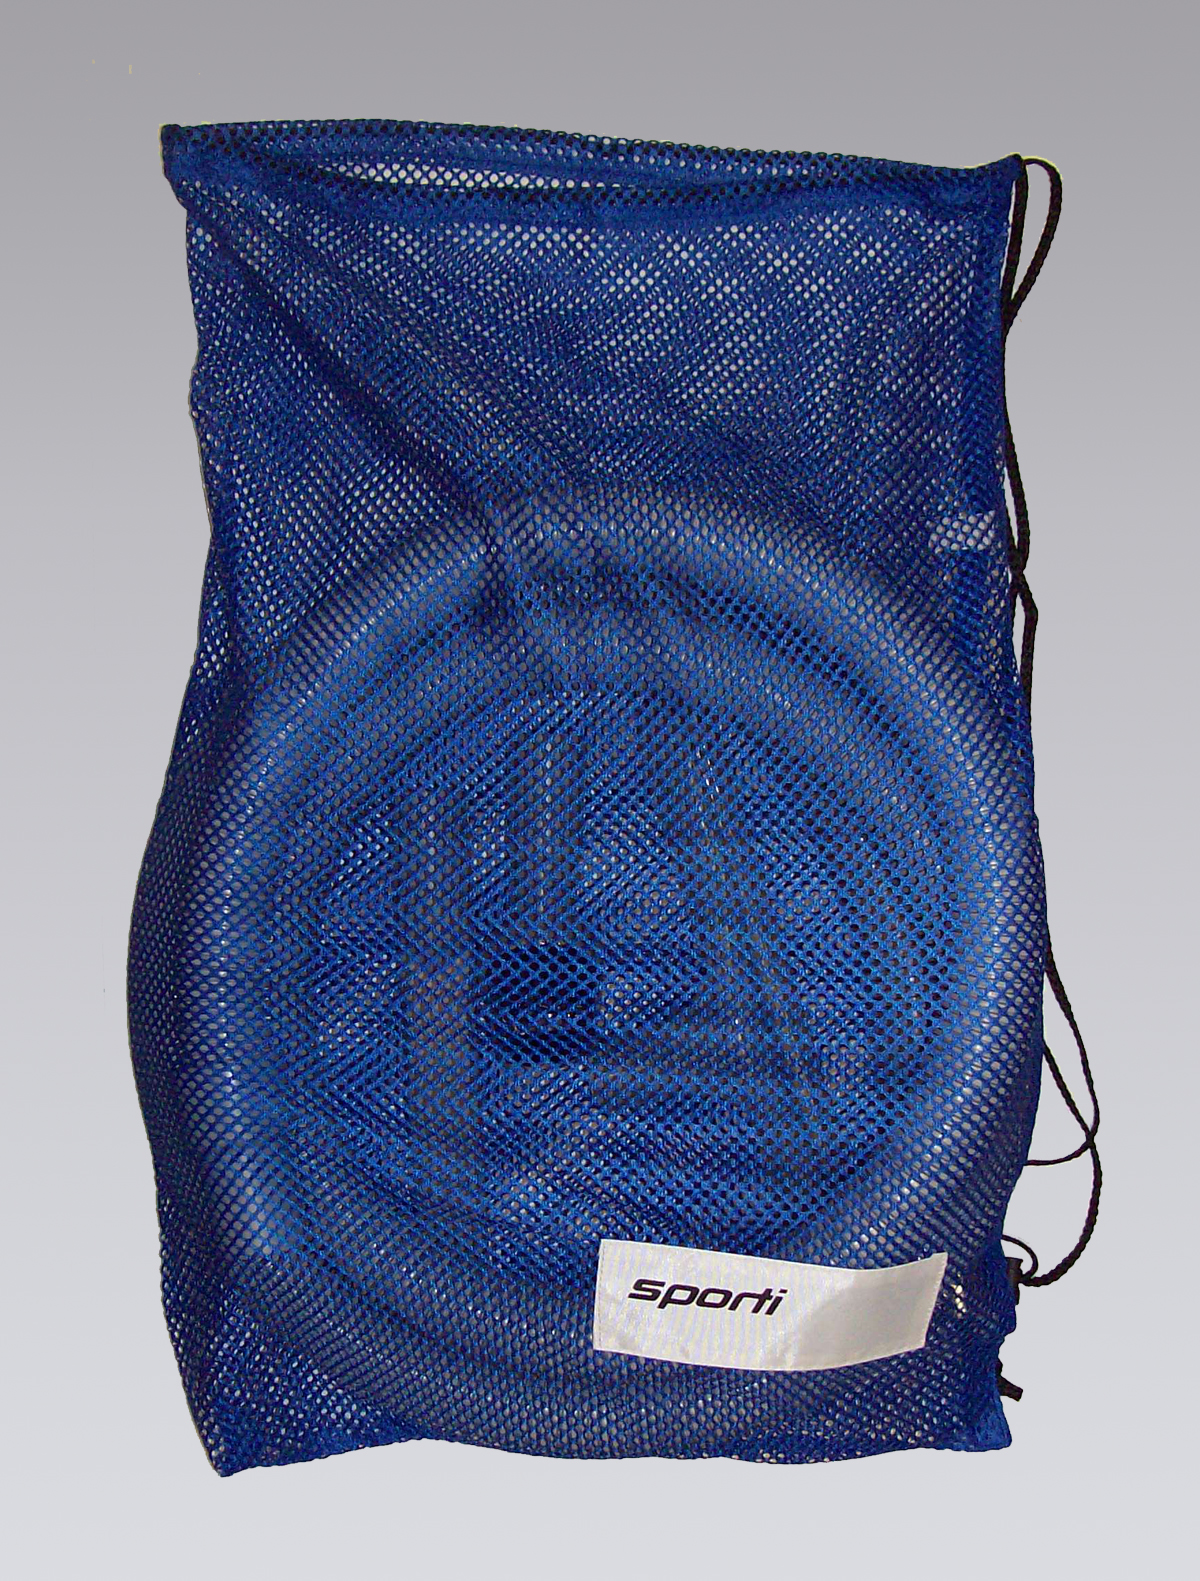 Nikro 862101 - Tool and Hose Carrying Bag